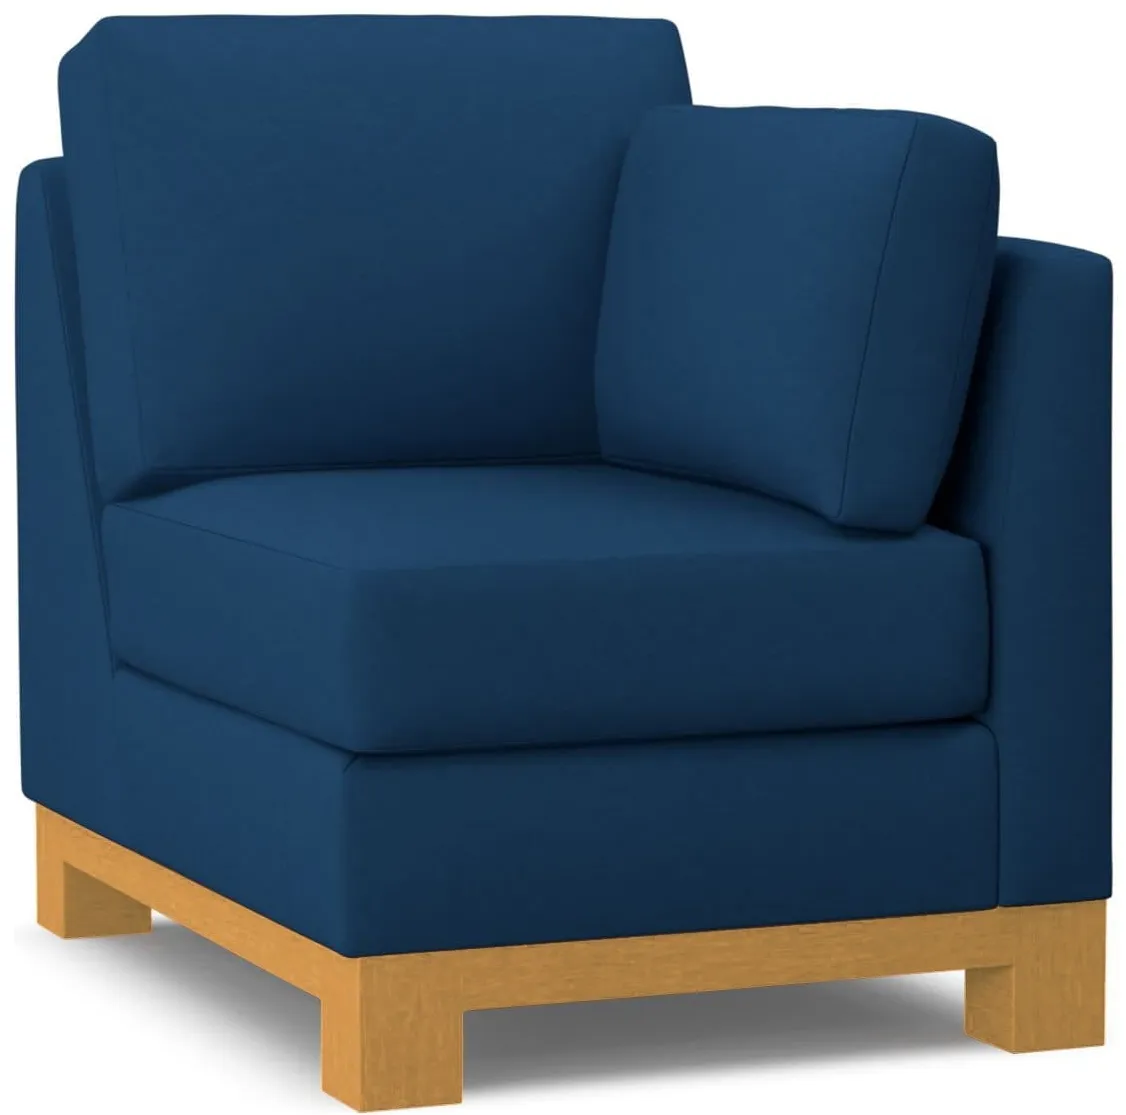 Avalon Right Arm Chair